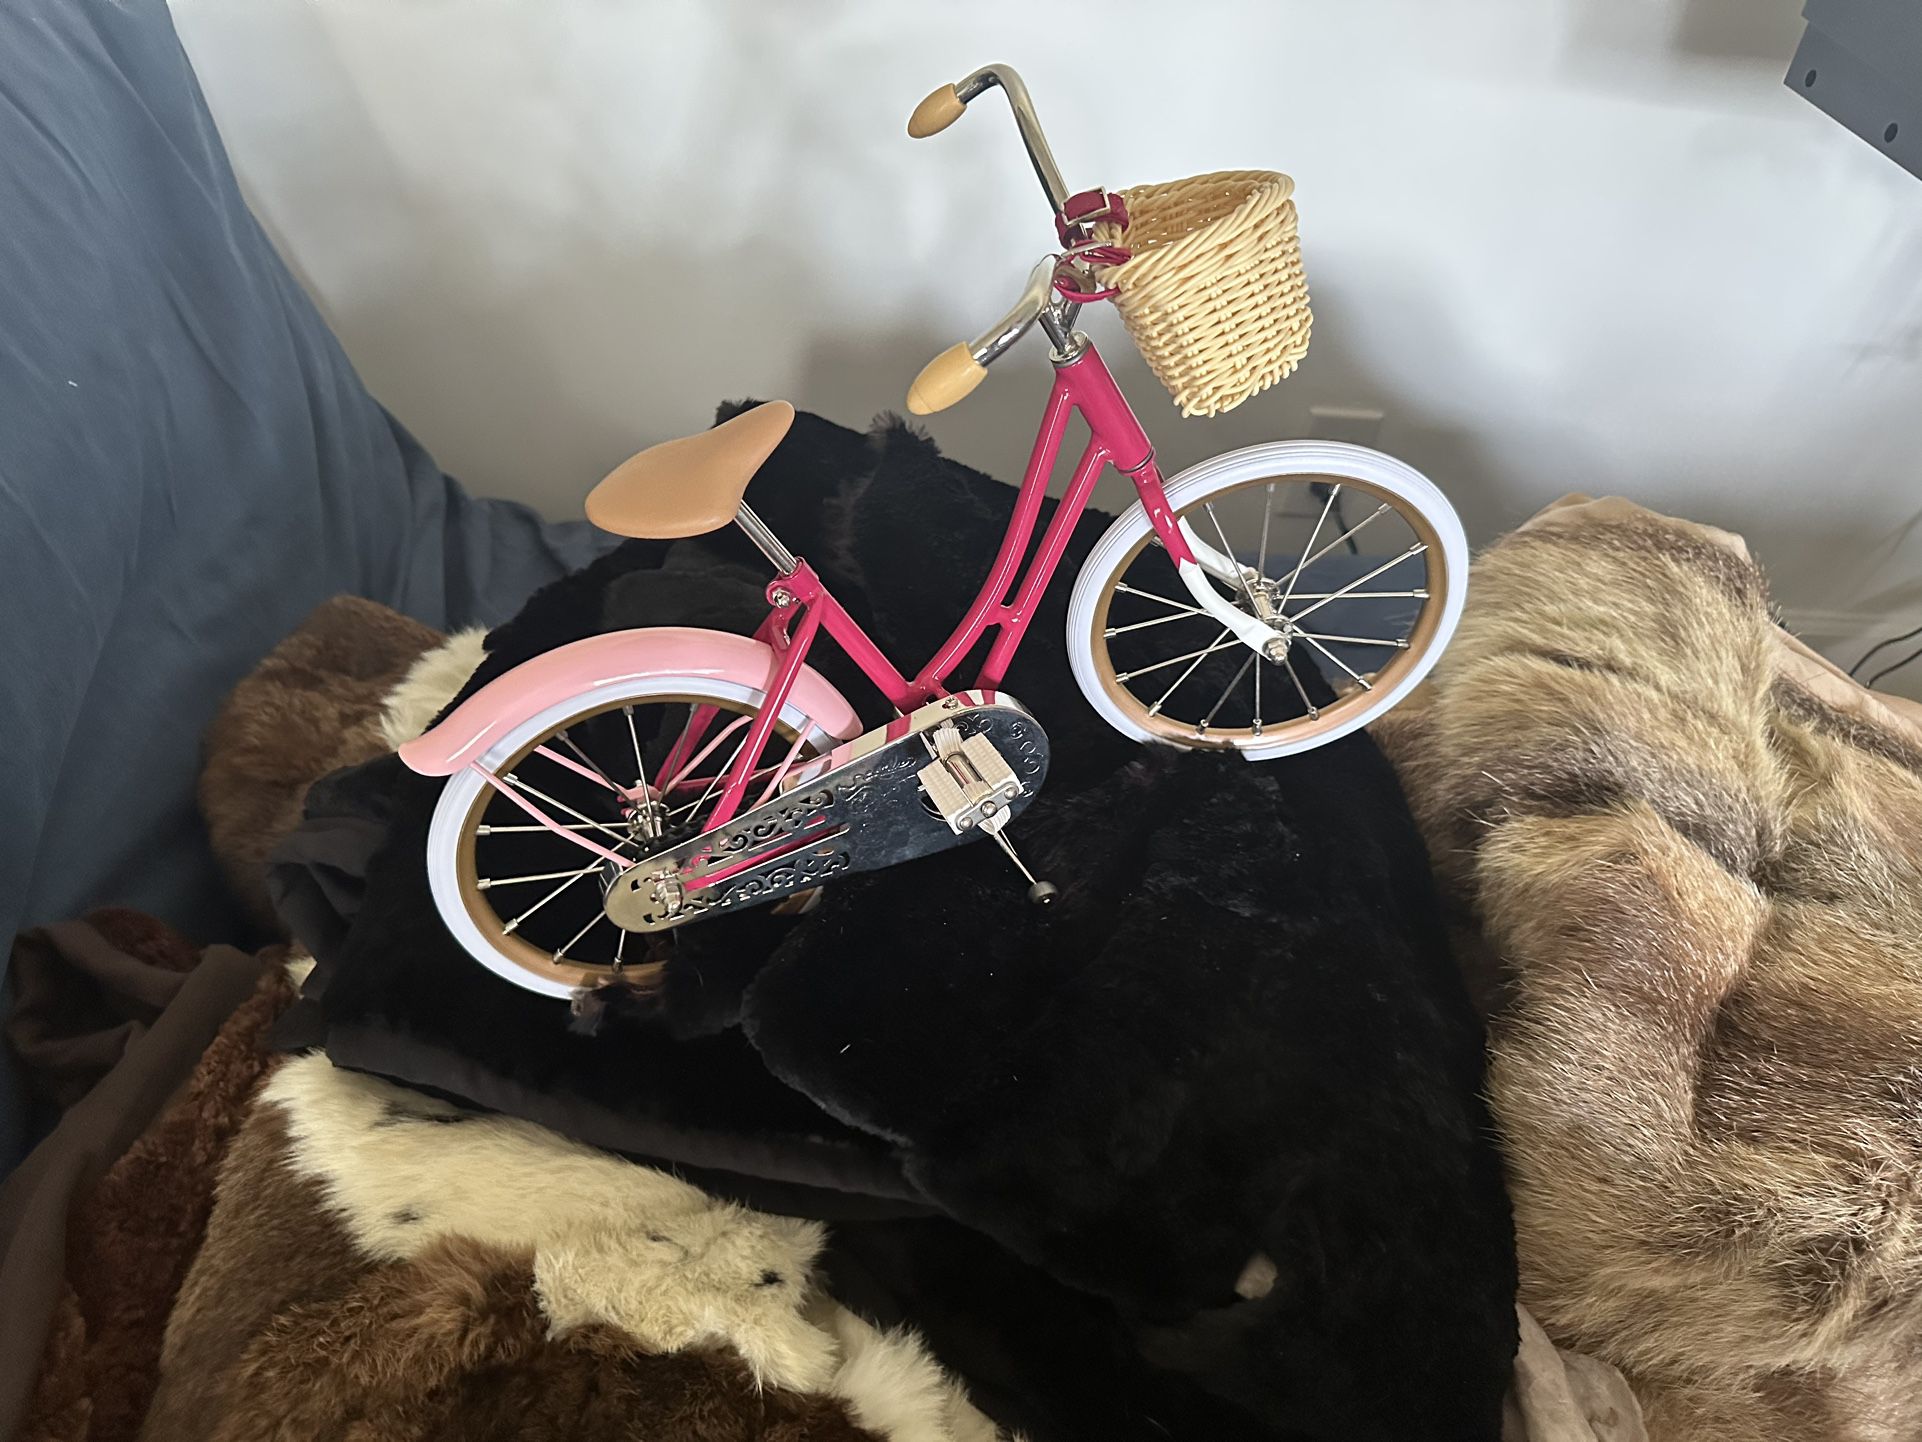 American Girl Samantha’s Bicycle (Barely Used)